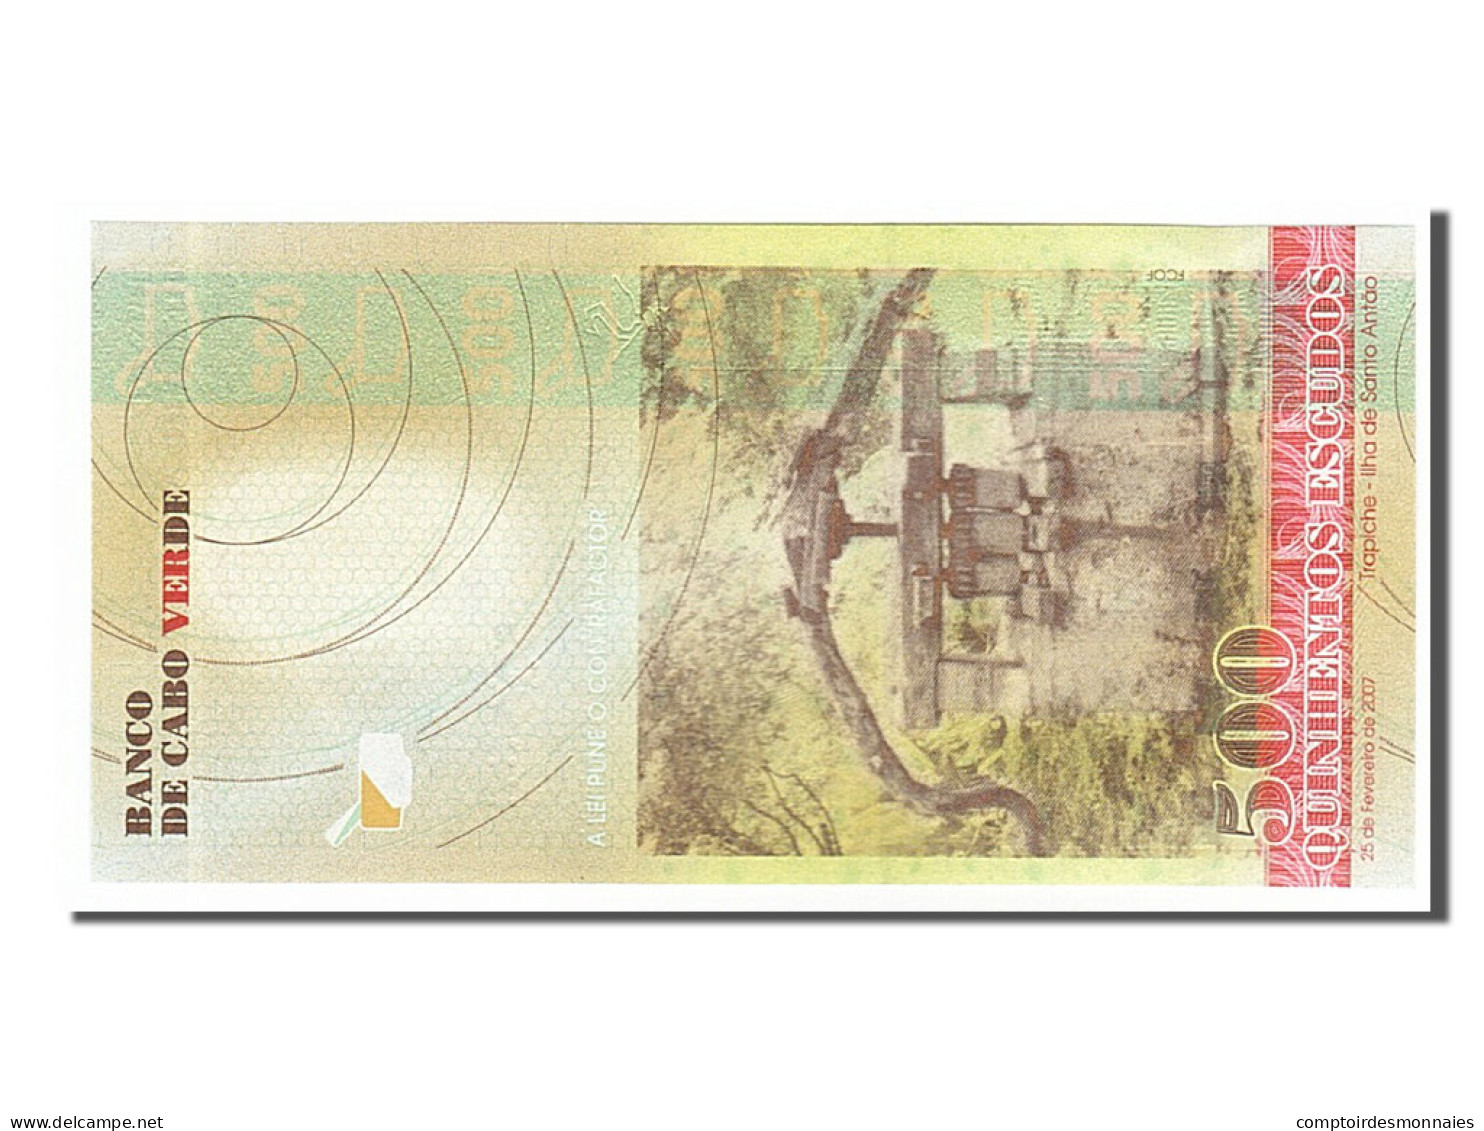 Billet, Cape Verde, 500 Escudos, 2007, 2007-02-25, NEUF - Cap Verde